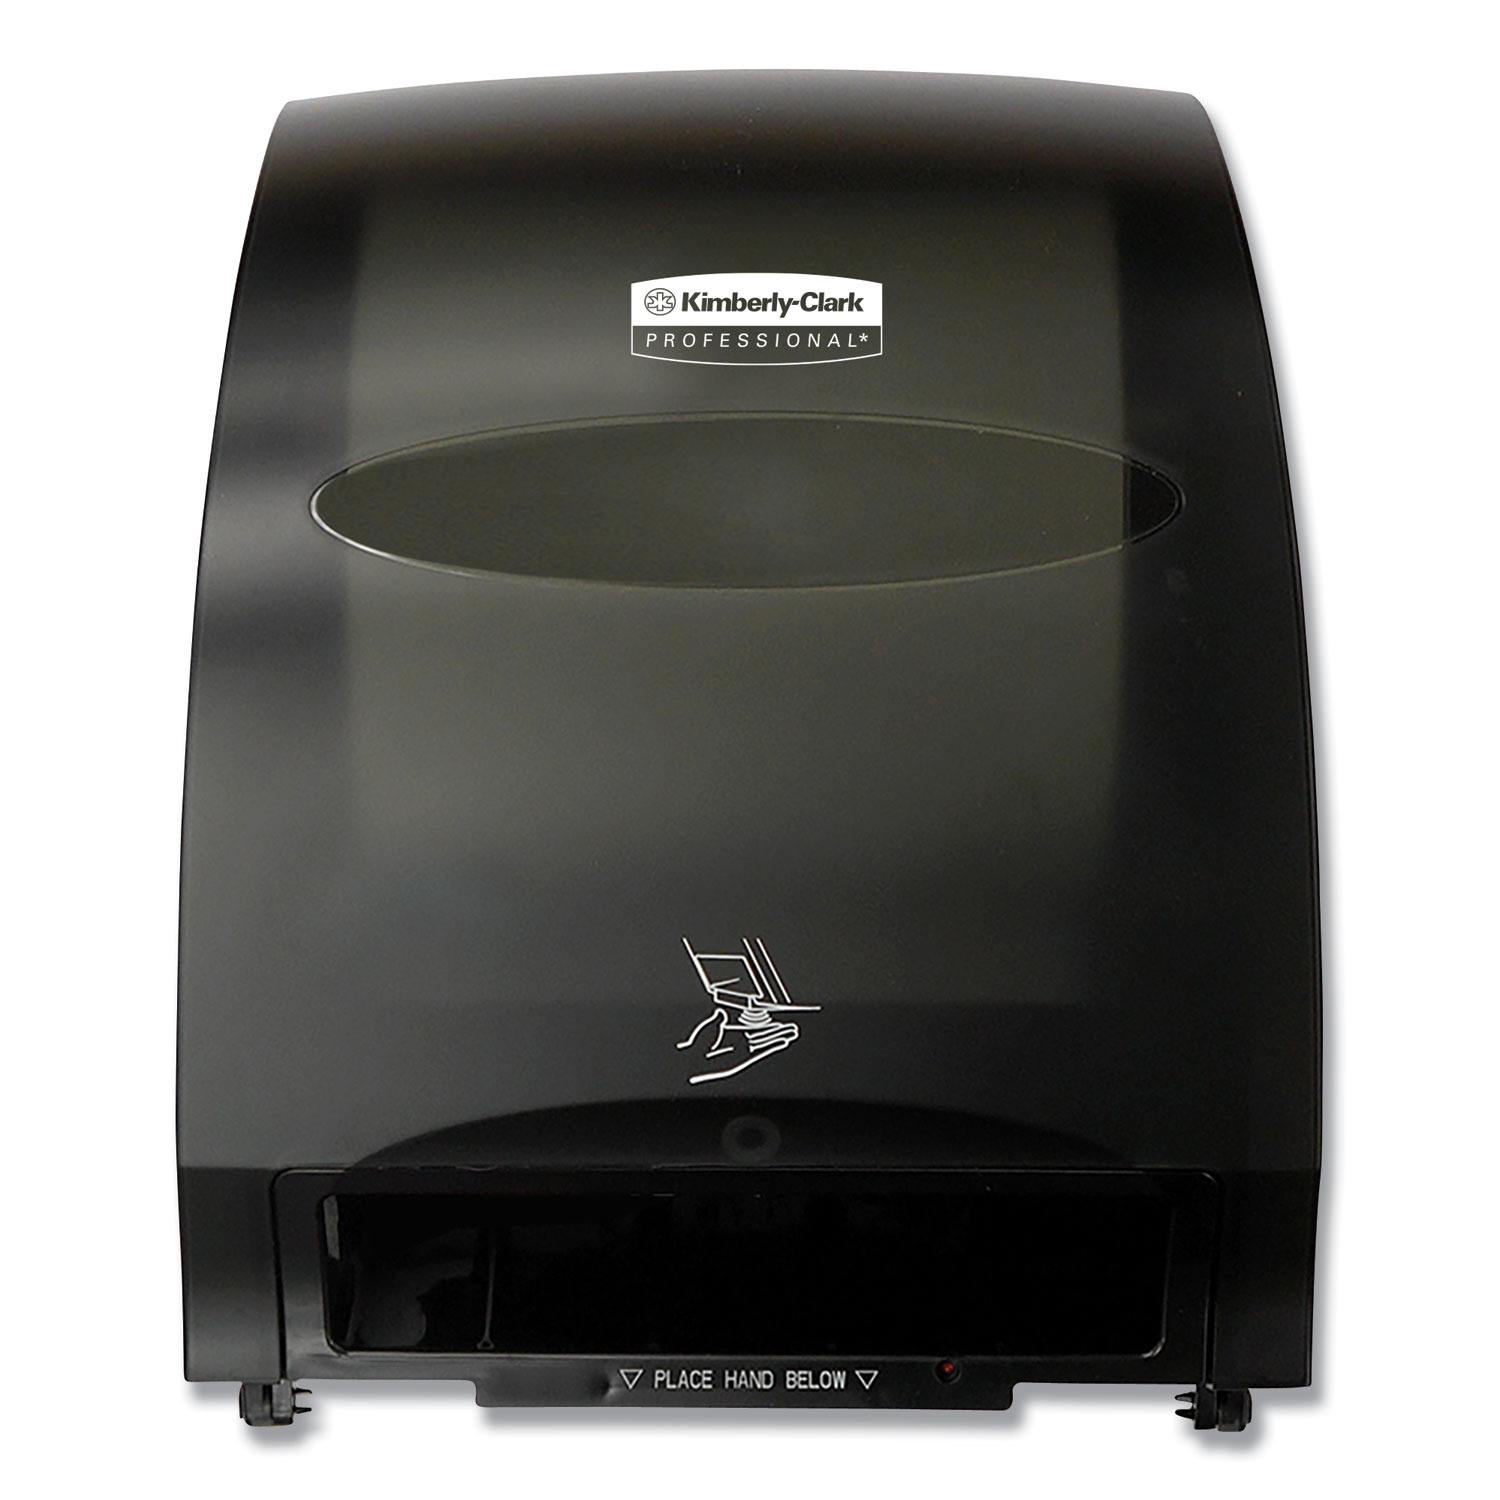  Kimberly-Clark Professional* 48857 Electronic Towel Dispenser, 12.7w x 9.572d x 15.761h, Black (KCC48857) 